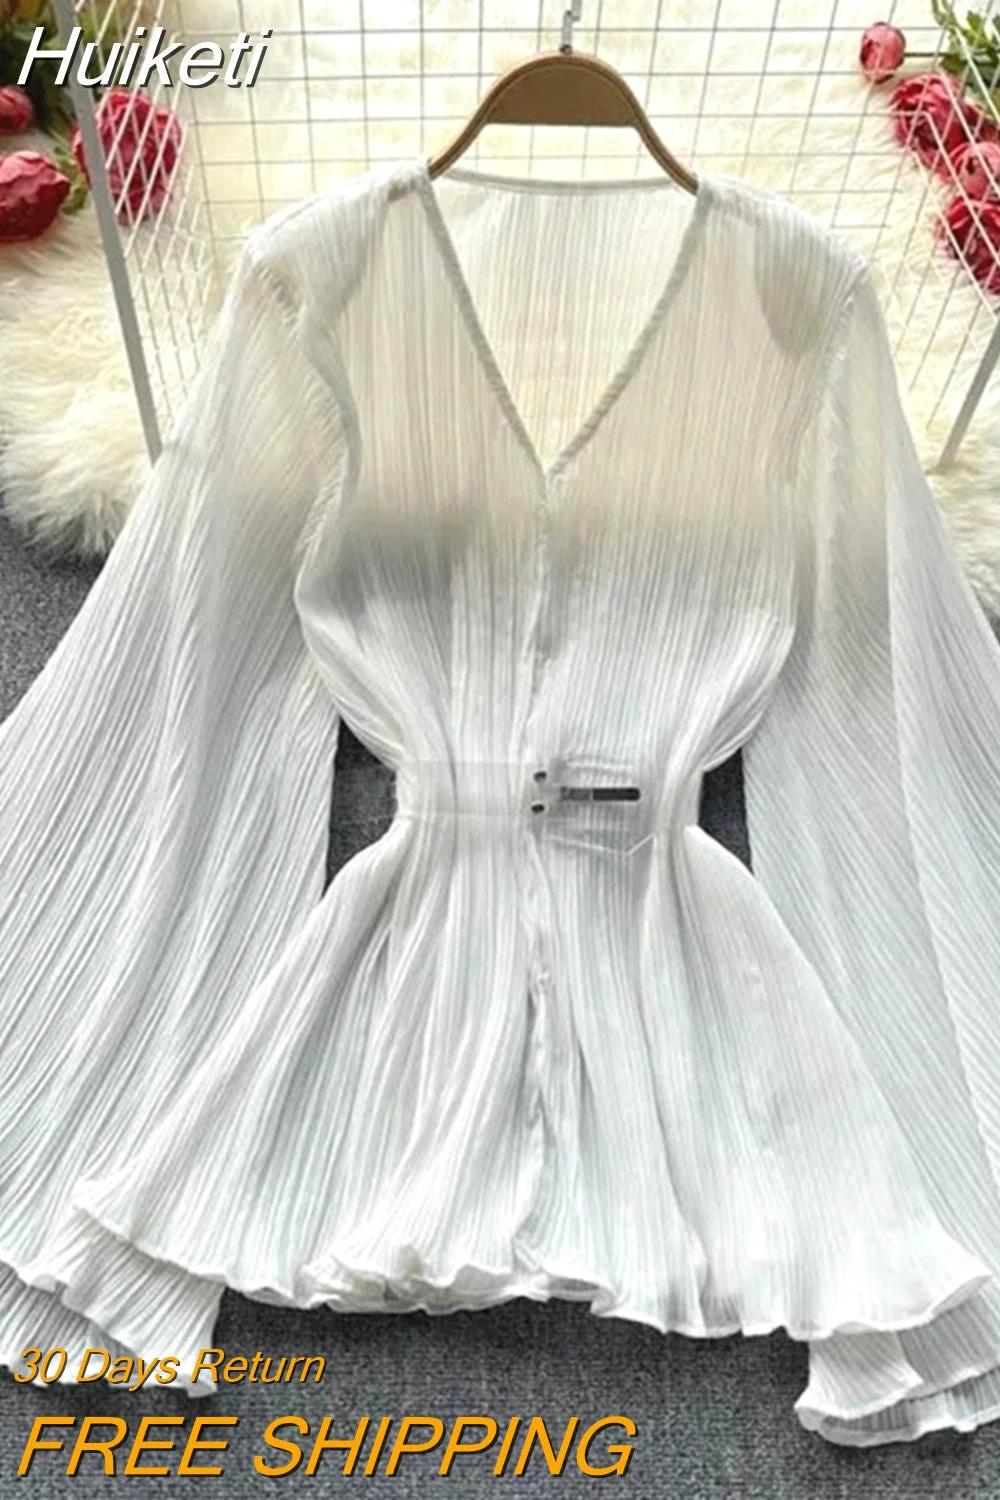 Huiketi Chiffon Flare Sleeve Women Shirts Sexy V Neck Designed Tunic White Fashion Beach Ladies Thin Tops New